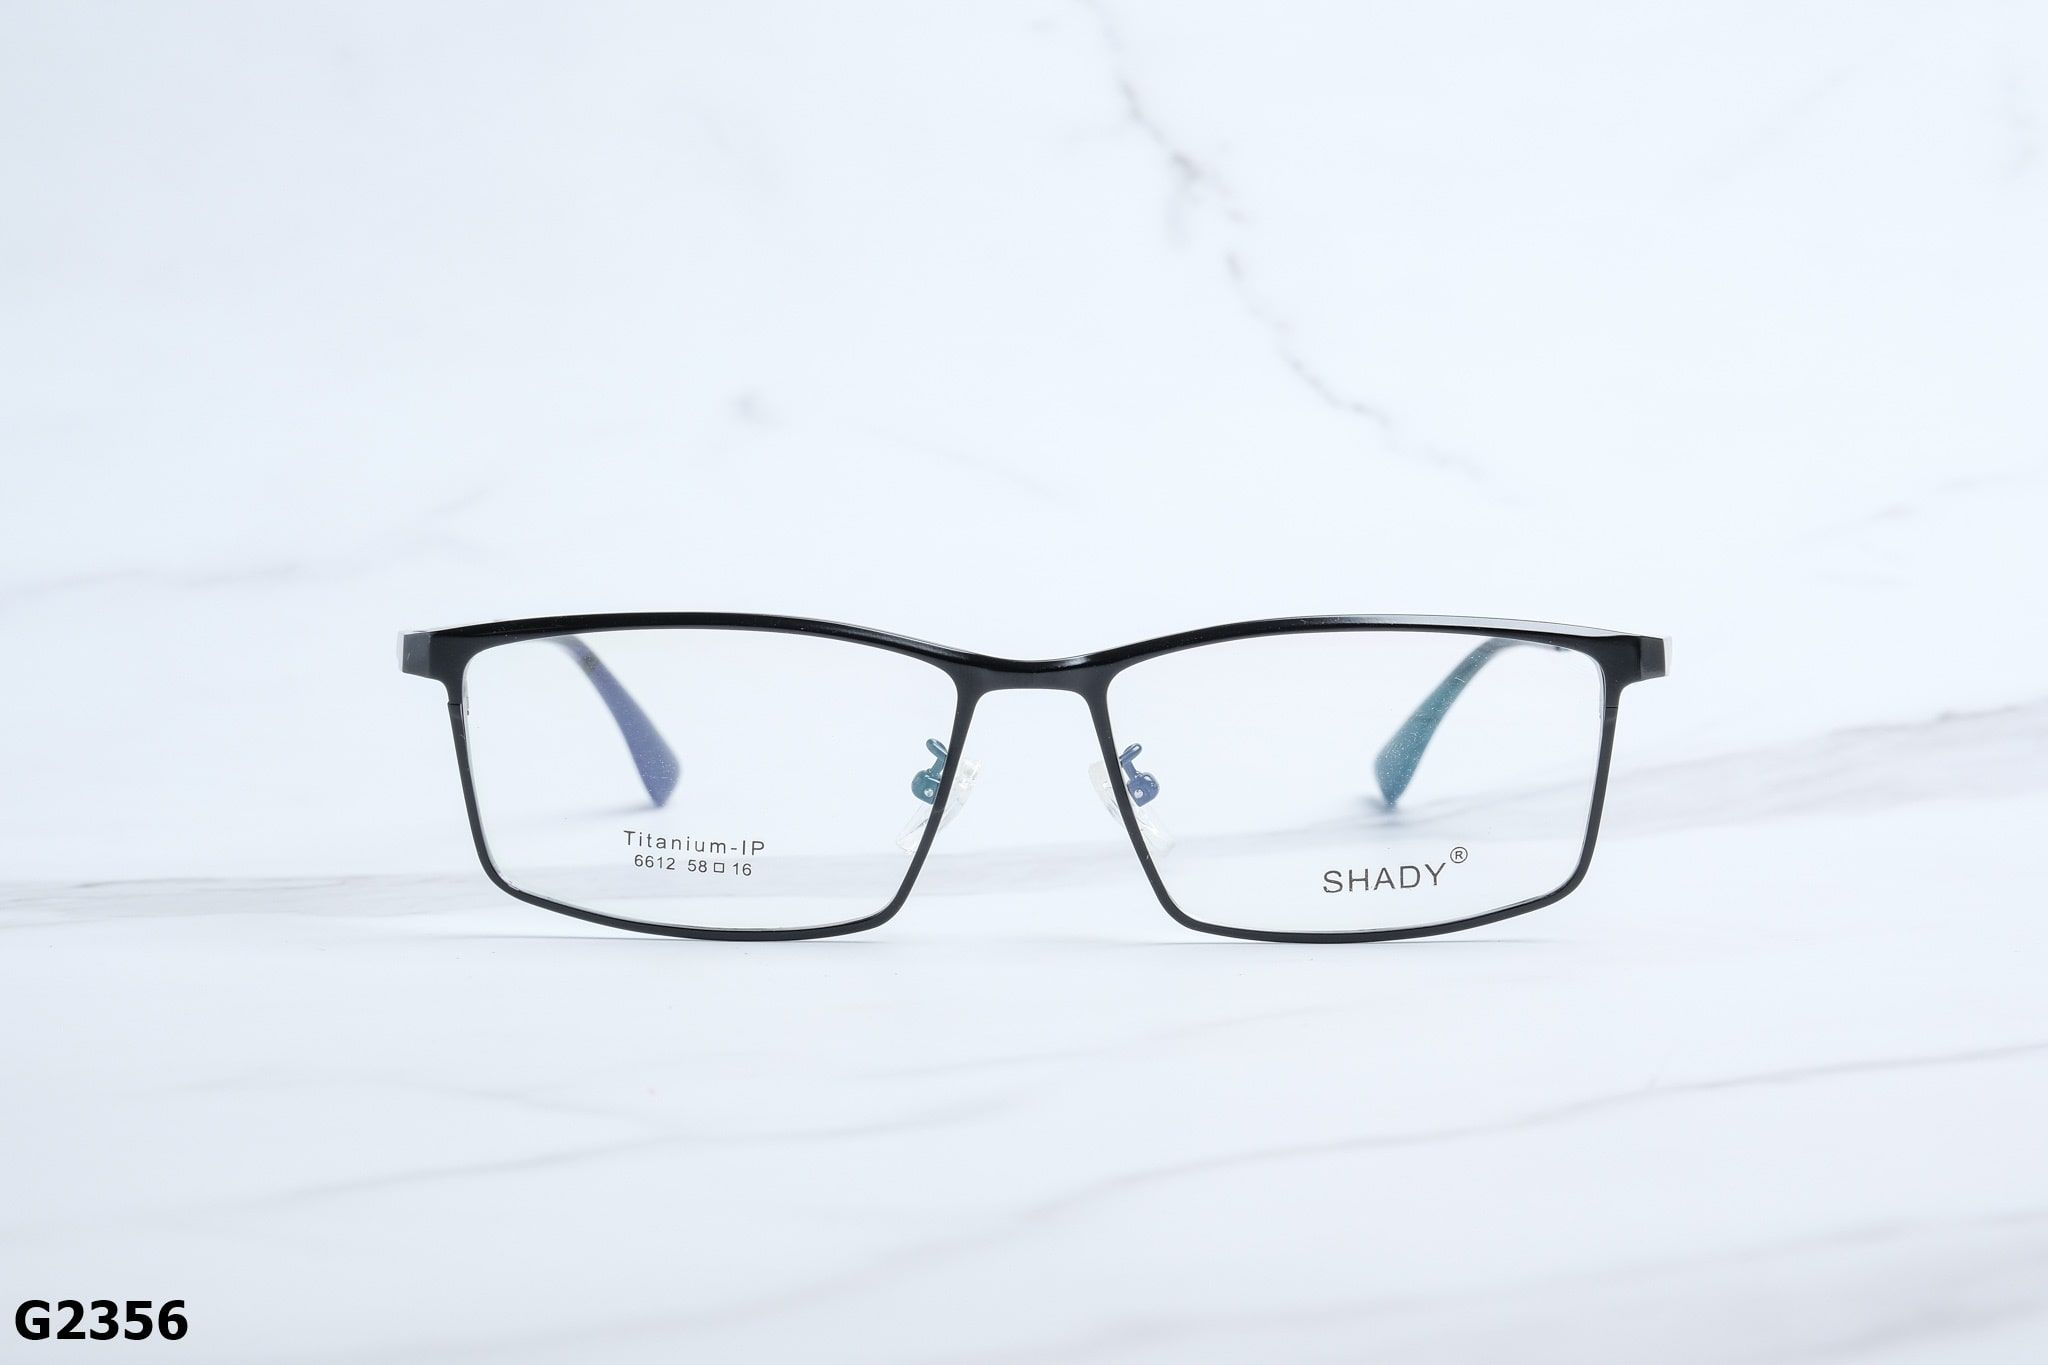  SHADY Eyewear - Glasses - G2356 